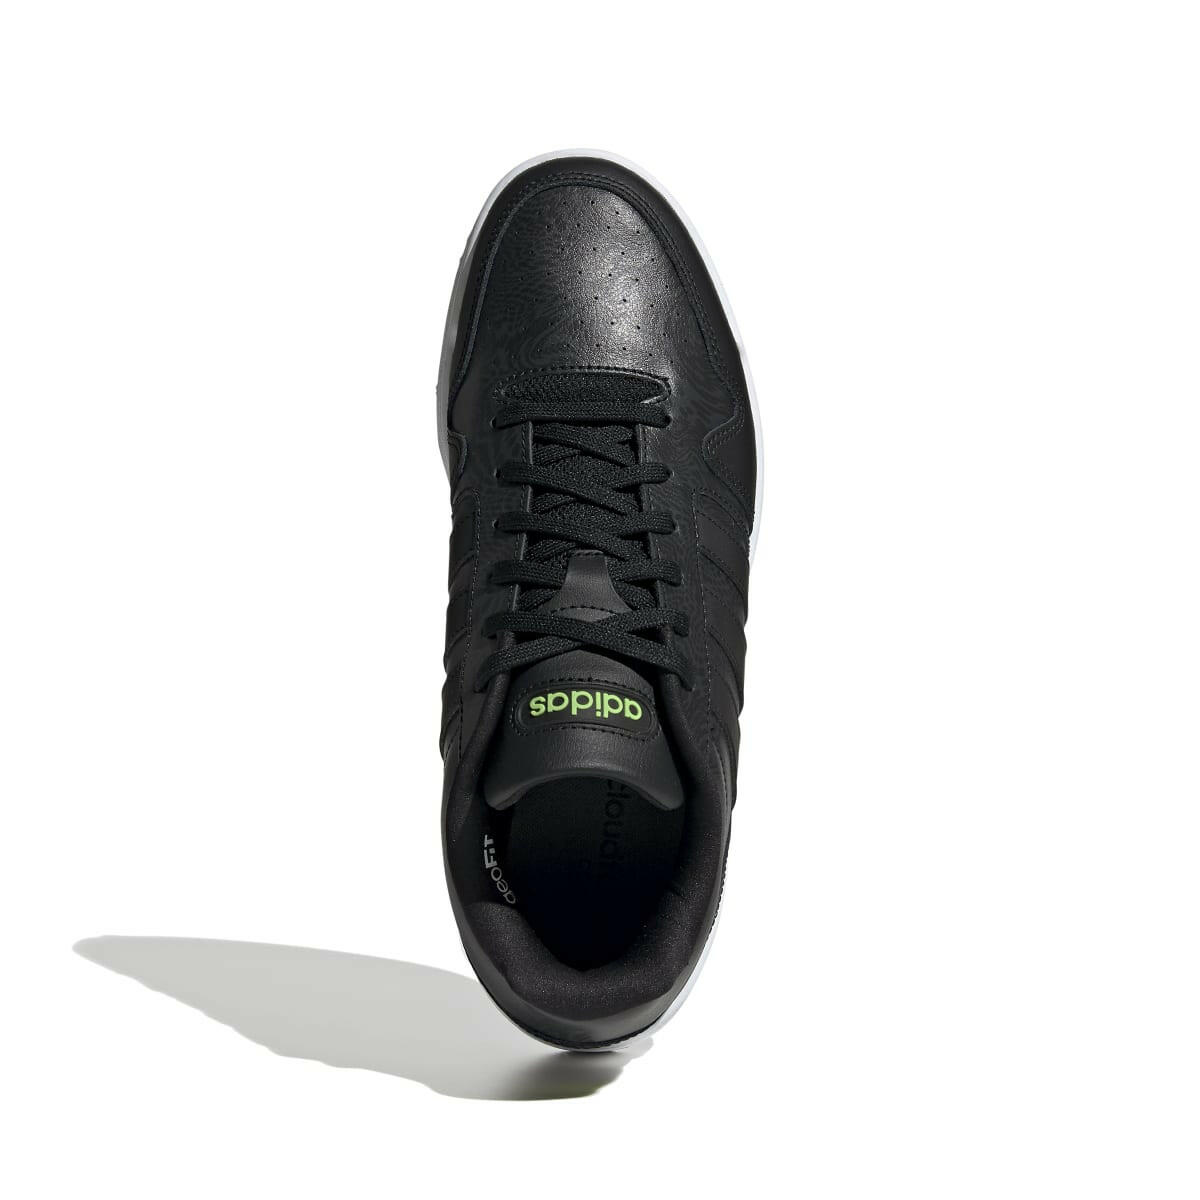 ADIDAS H00463 POSTMOVE MN'S (Medium) Carbon/Black/Green Leather Basketball Shoes - GENUINE AUTHENTIC BRAND LLC  